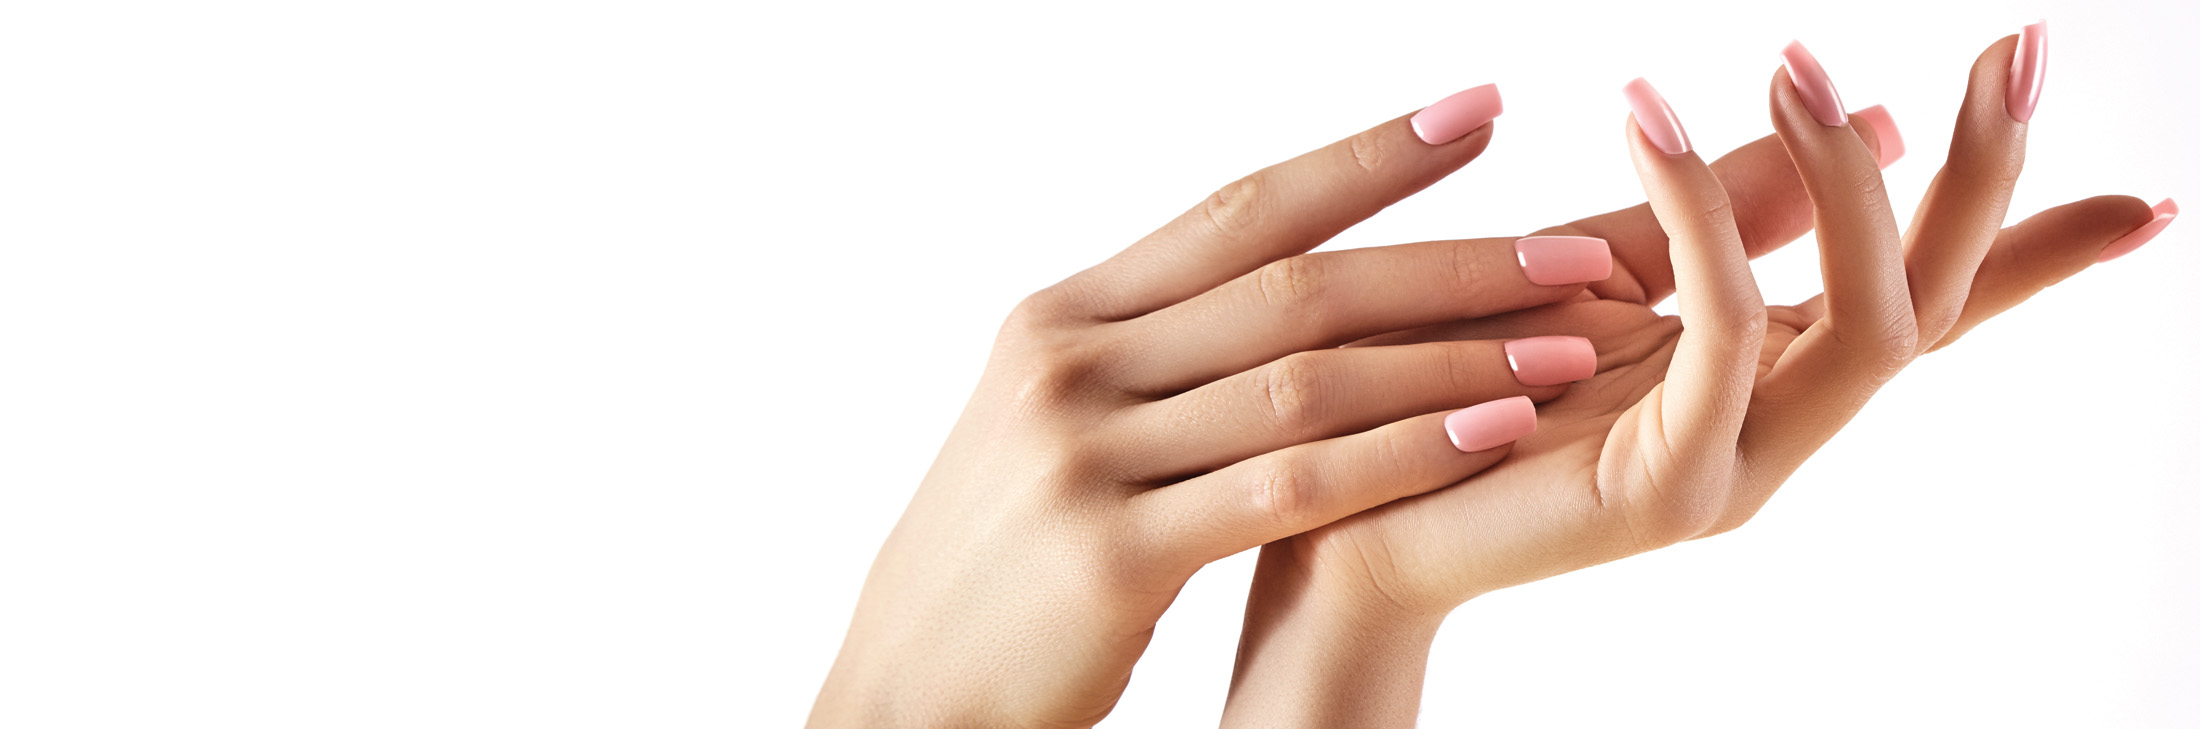 natural nails manicure